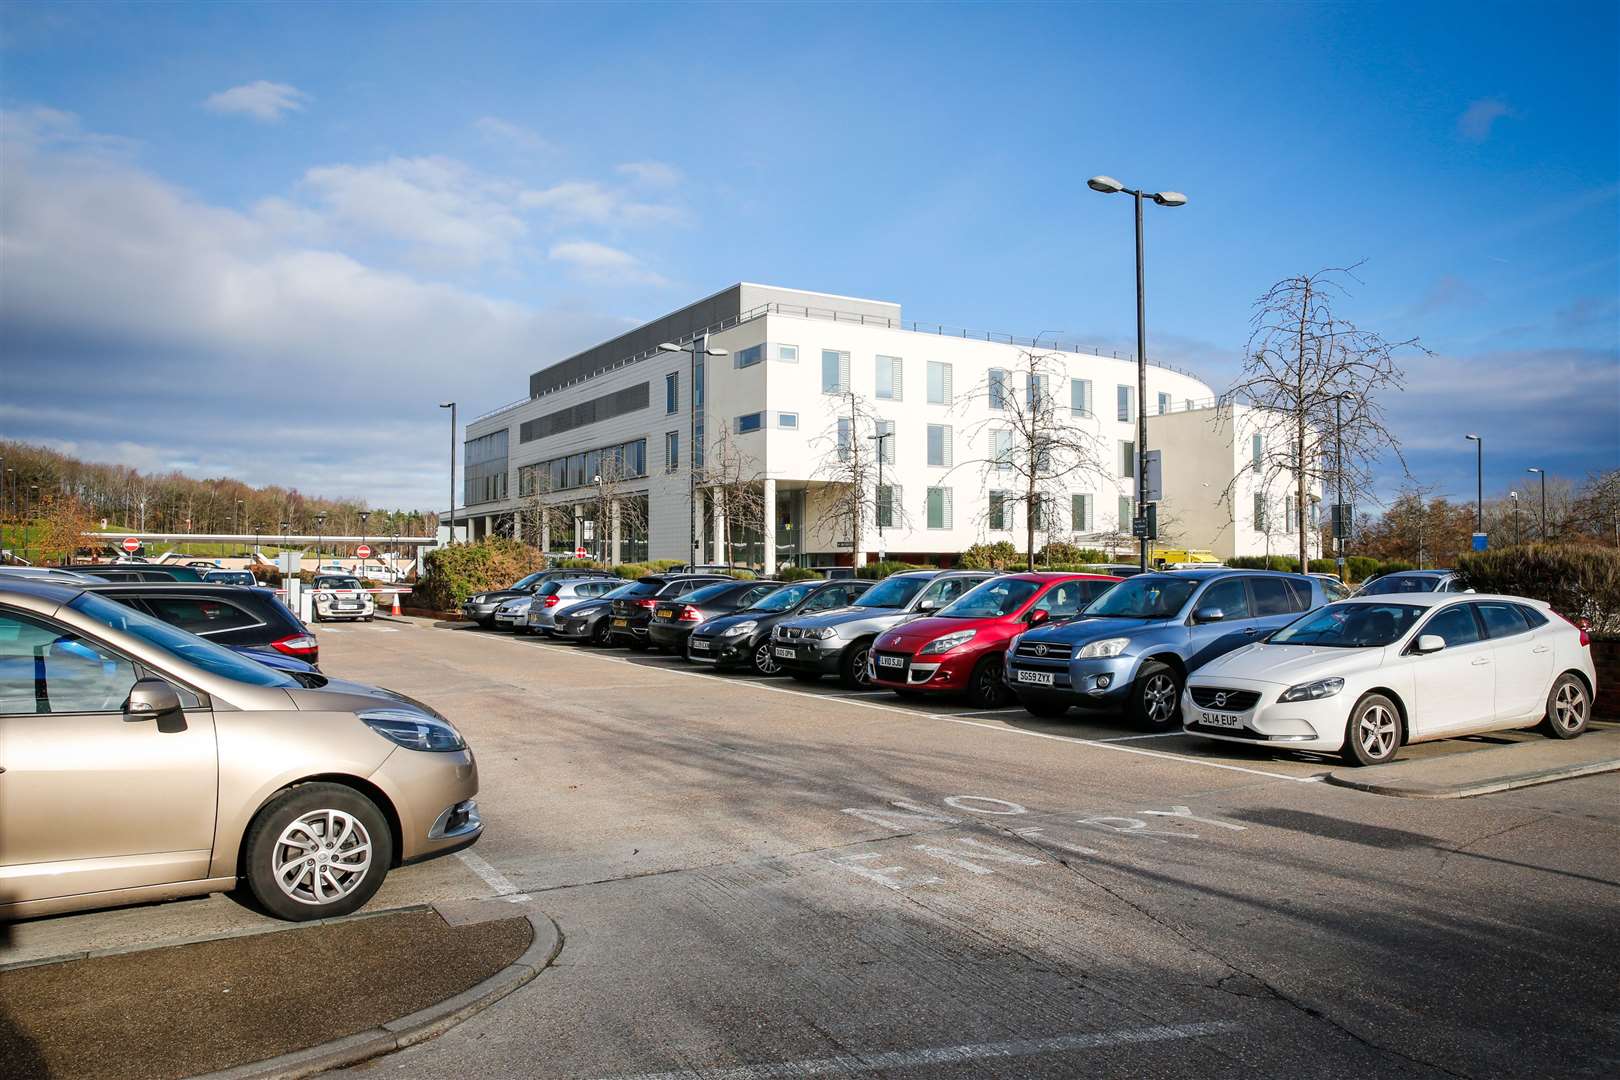 Car parks at Tunbridge Wells Hospital. Picture: Matthew Walker